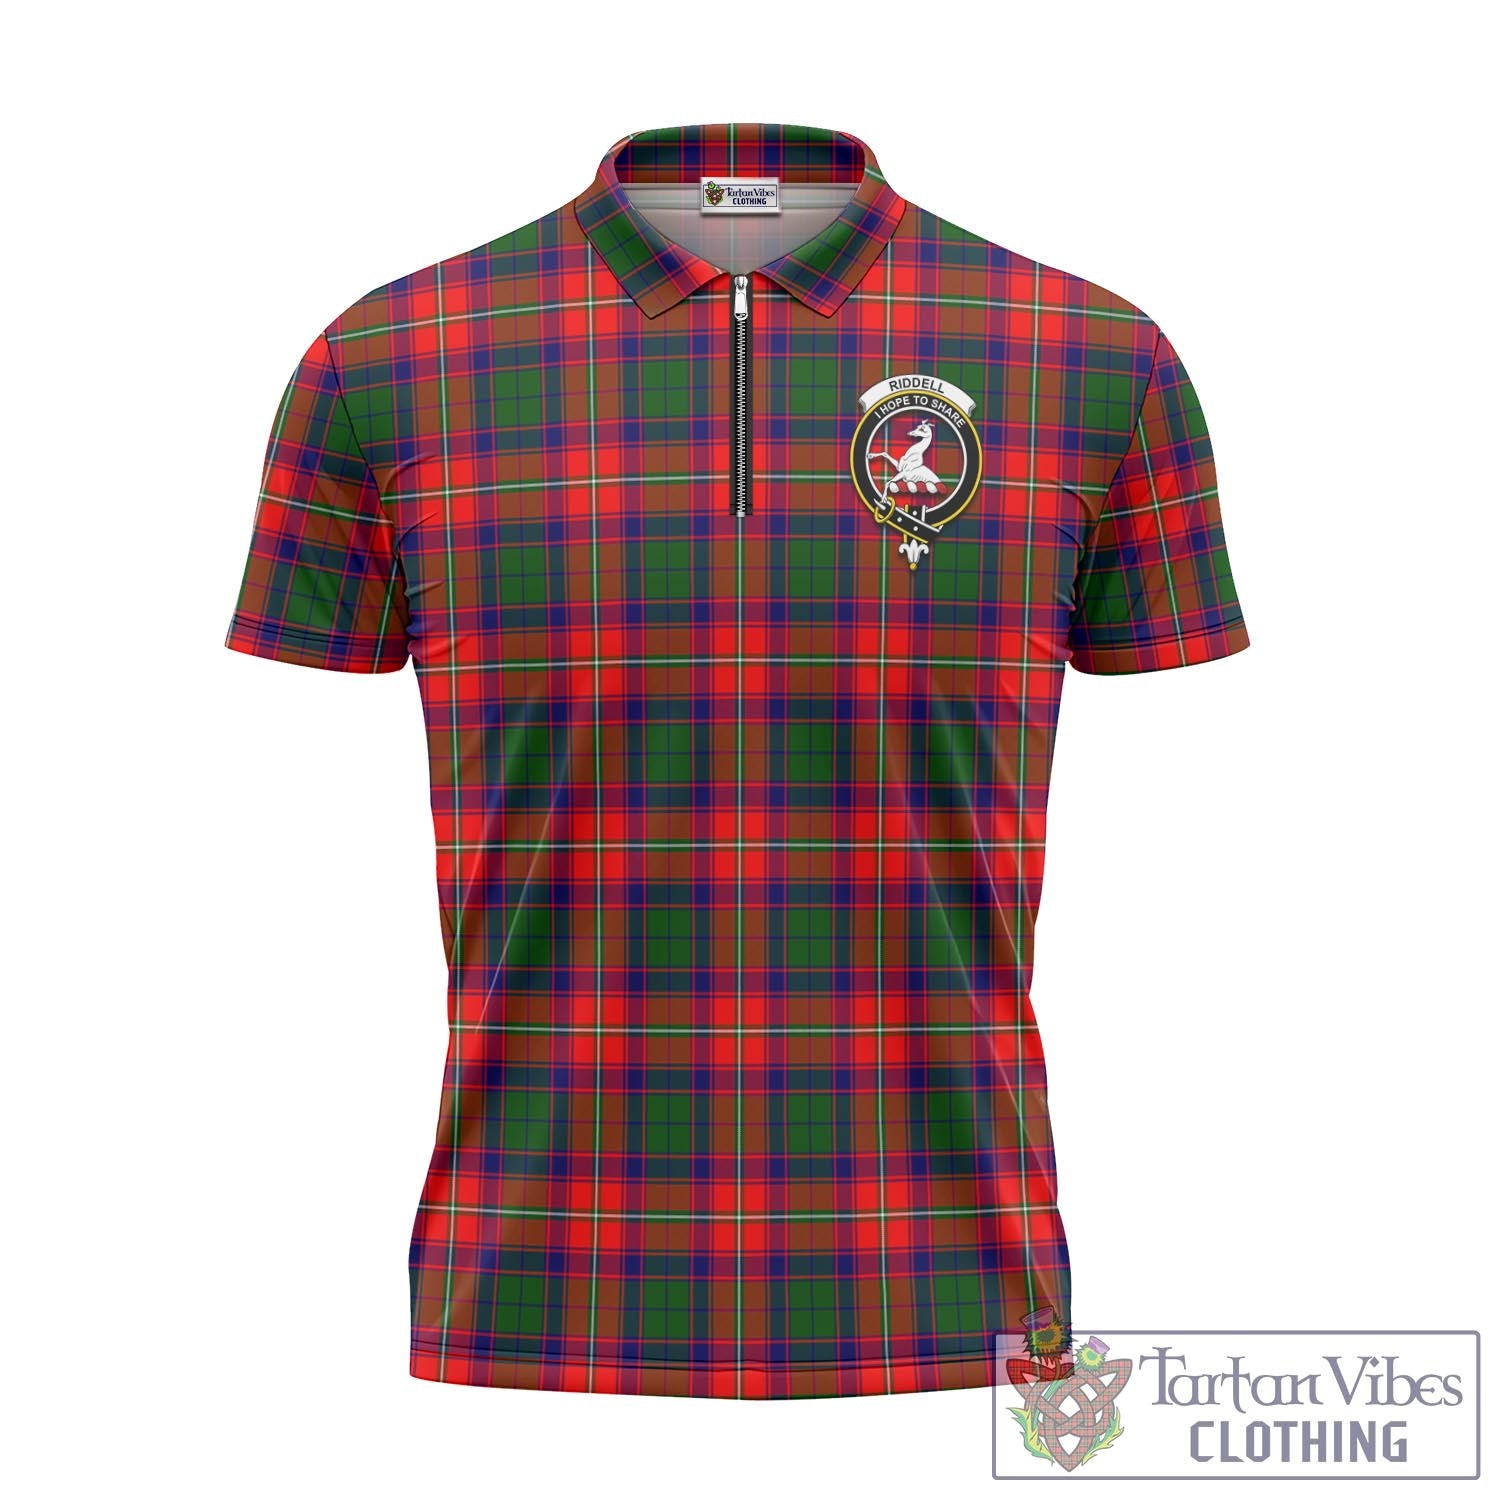 Tartan Vibes Clothing Riddell Tartan Zipper Polo Shirt with Family Crest